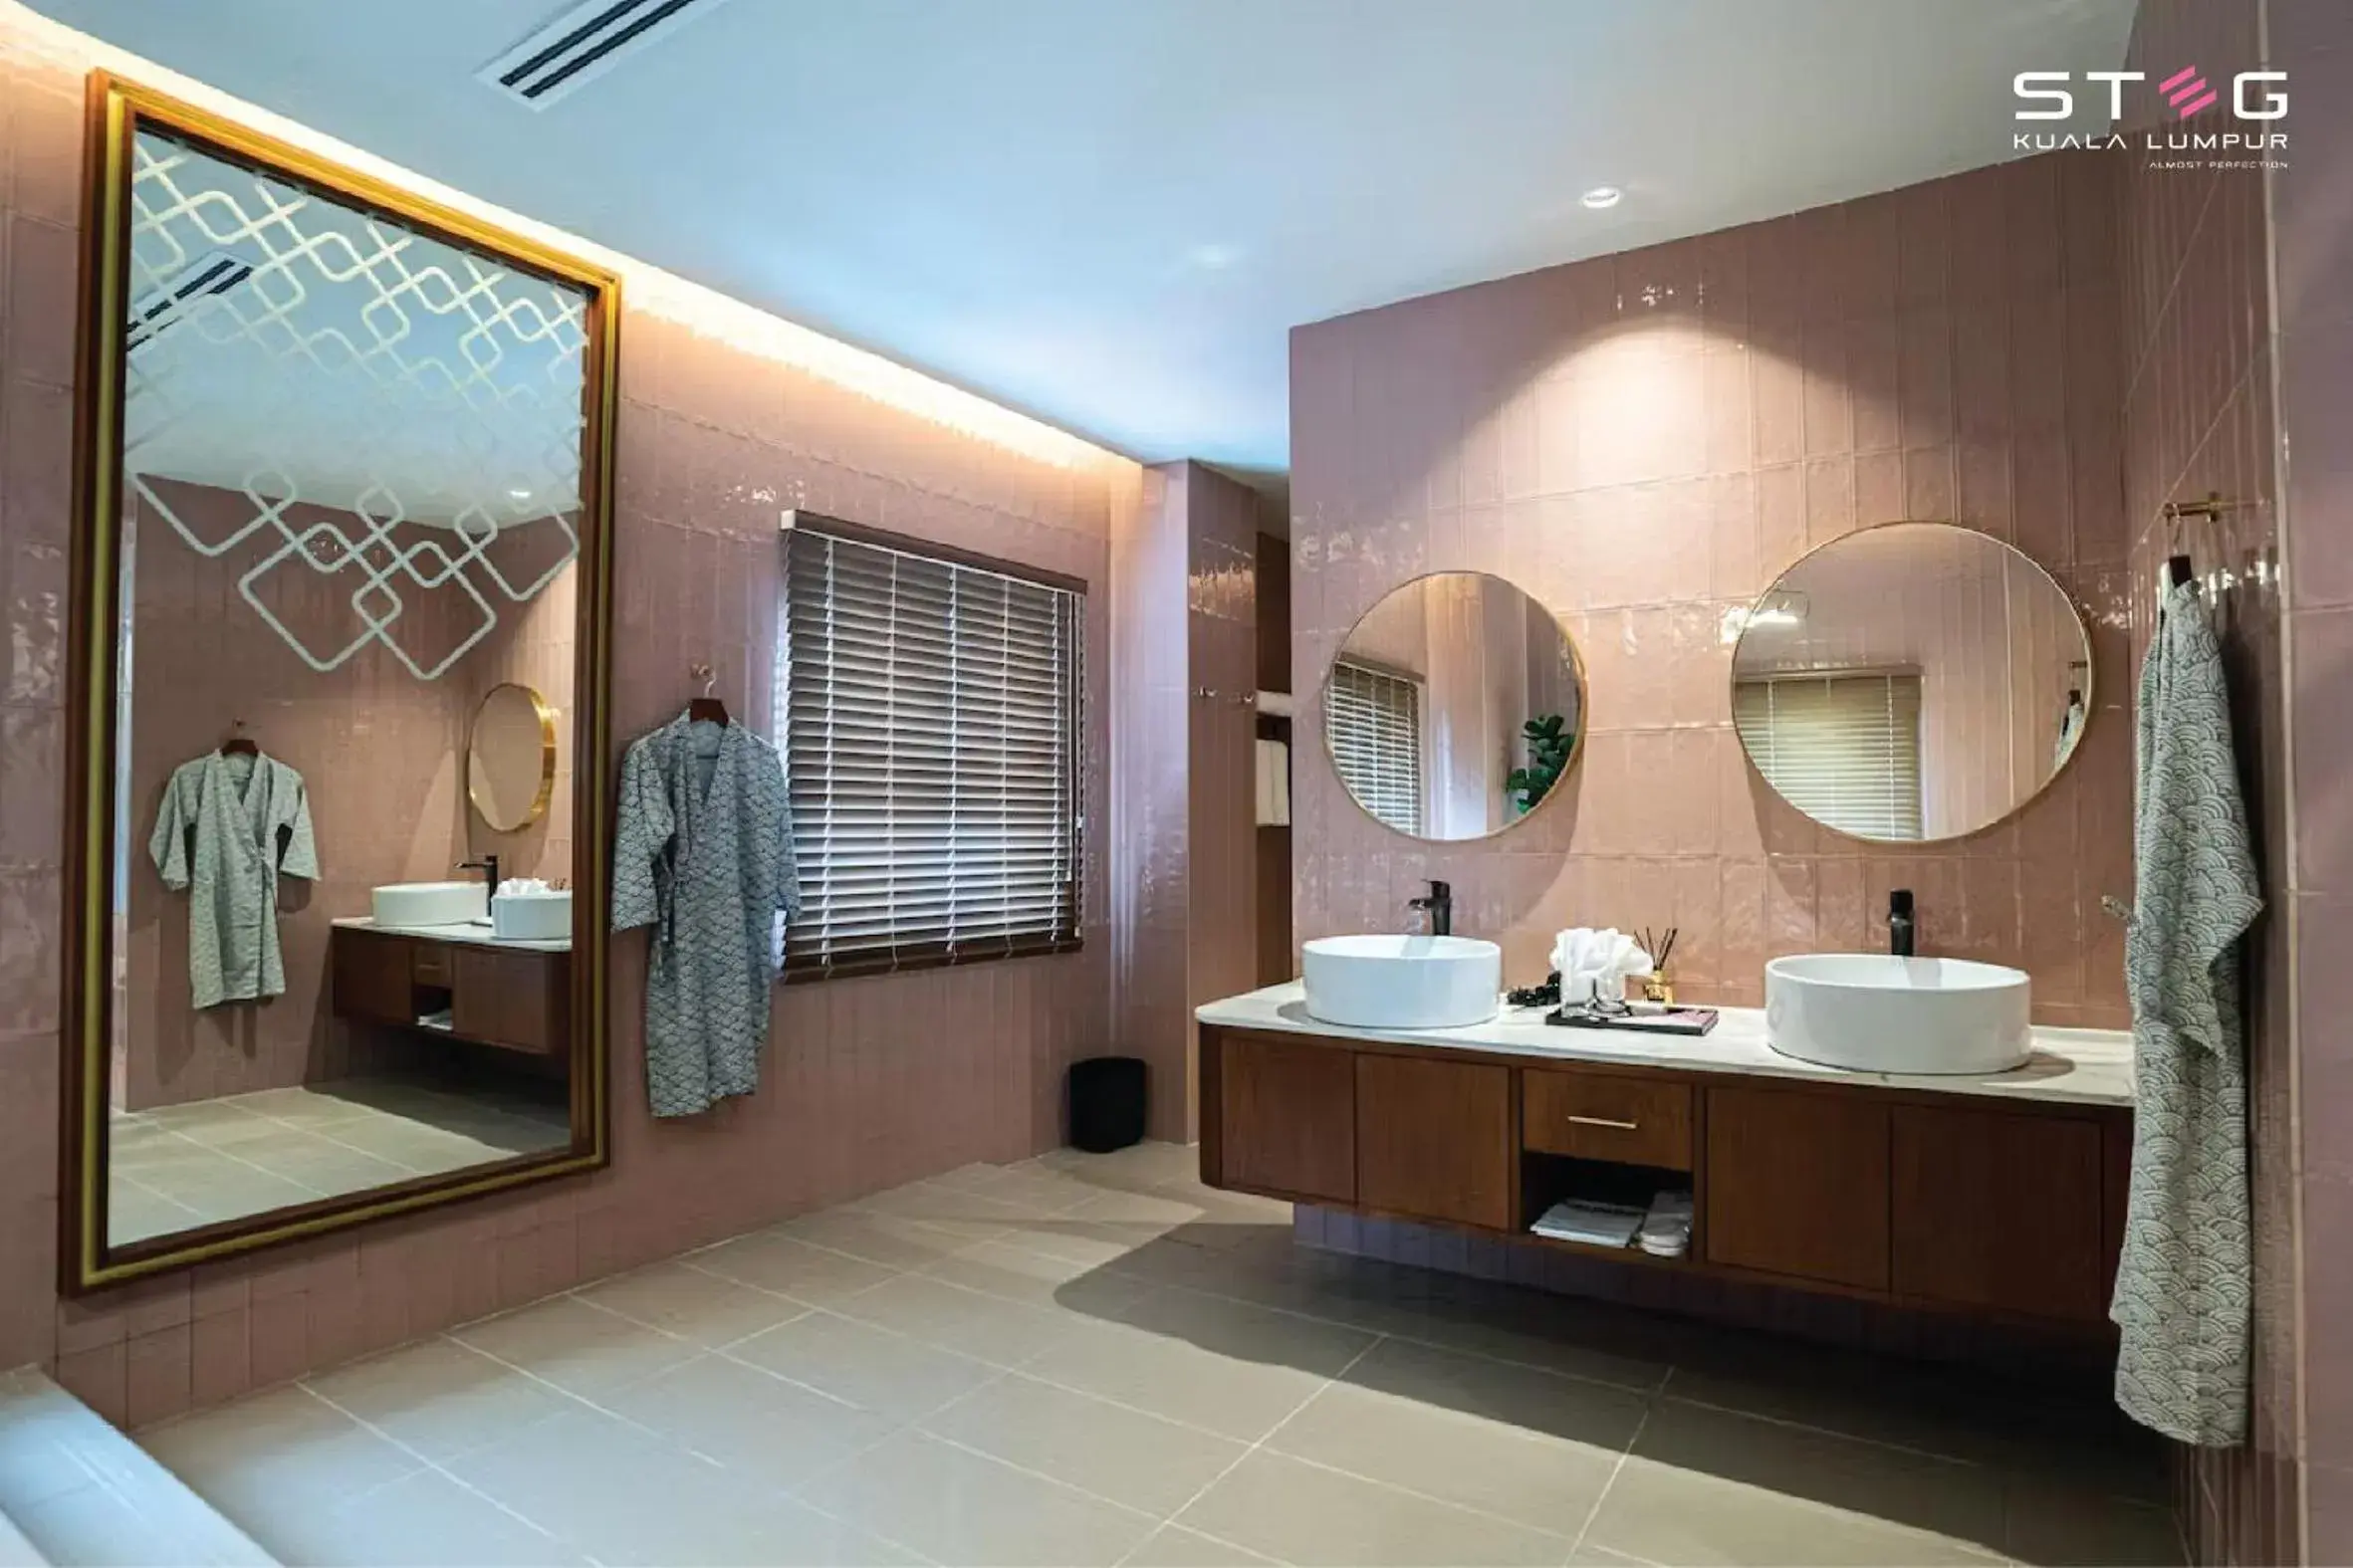 Bathroom in STEG Kuala Lumpur